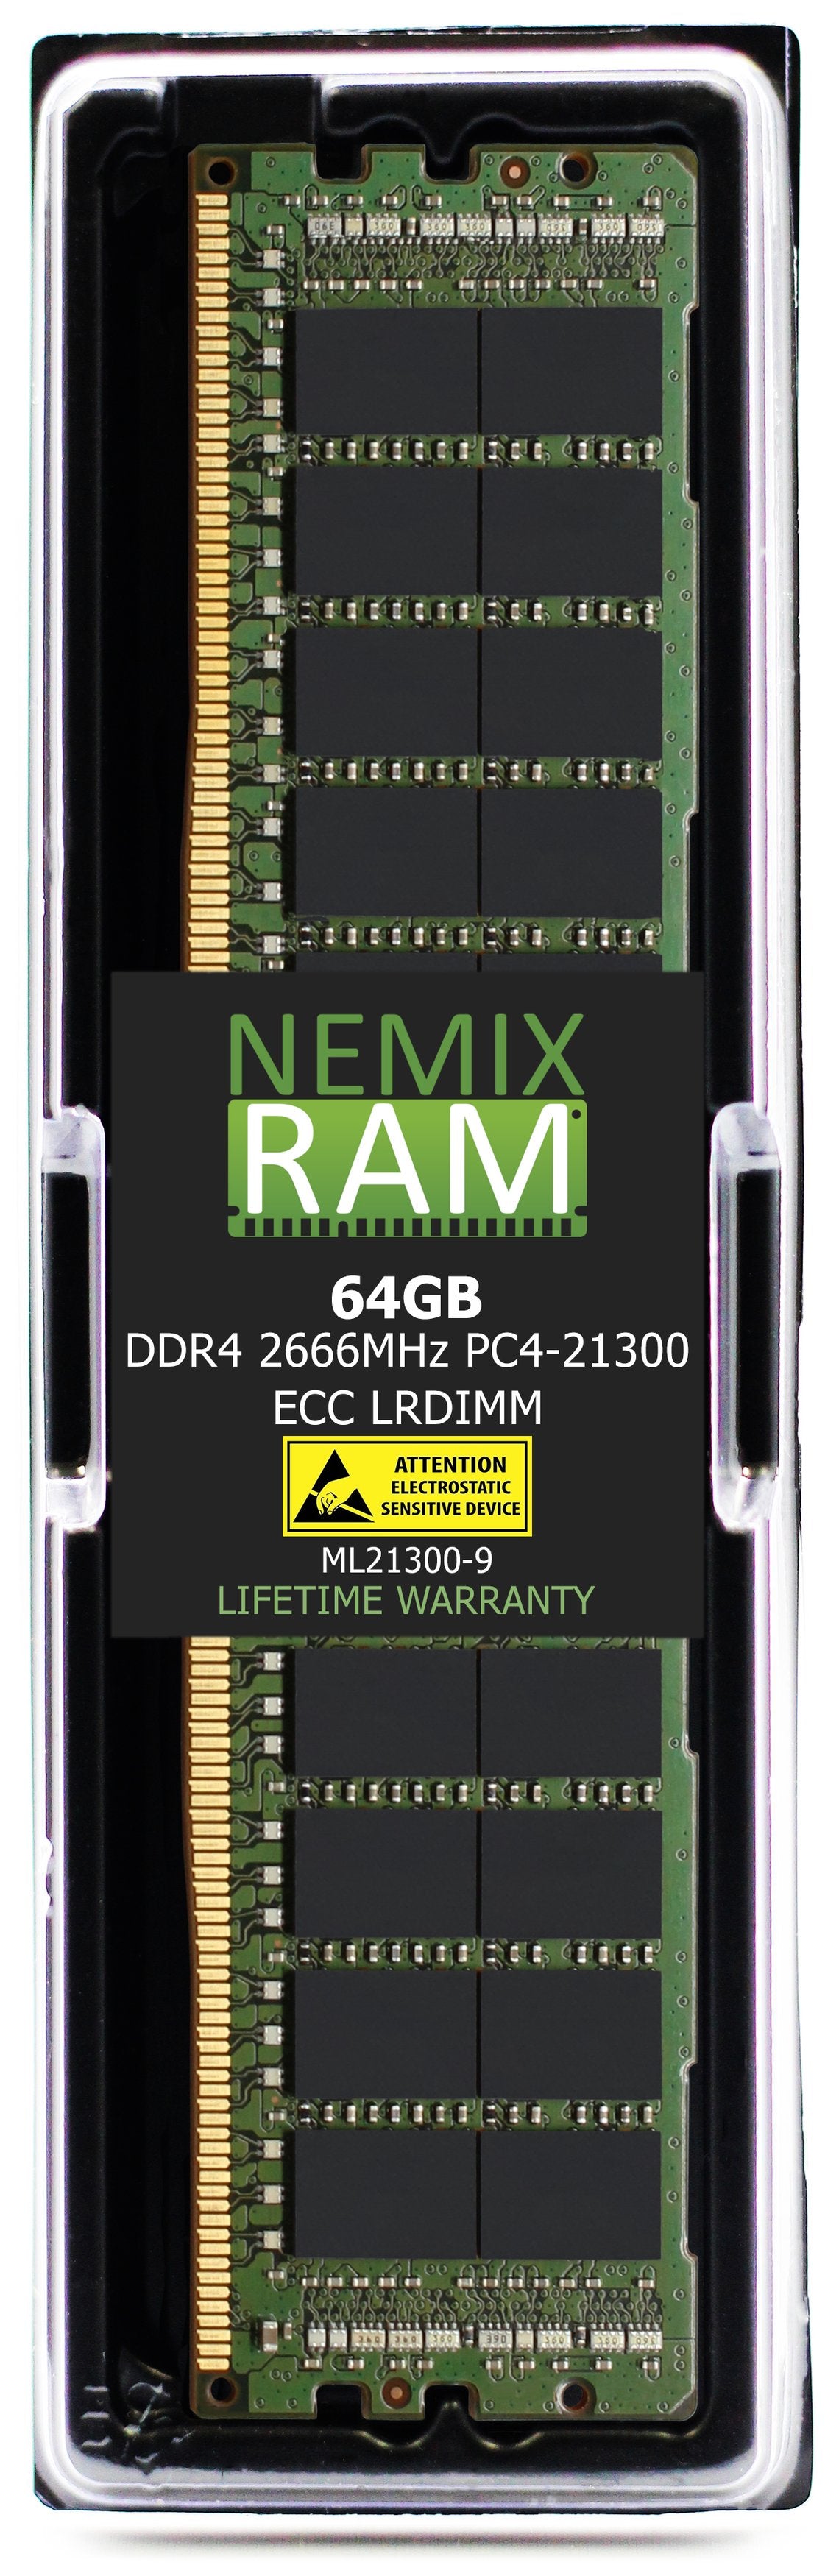 NEC Express5800 R120h Memory Module N8102-712 64GBDDR4 2666MHZ PC4-21300 LRDIMM